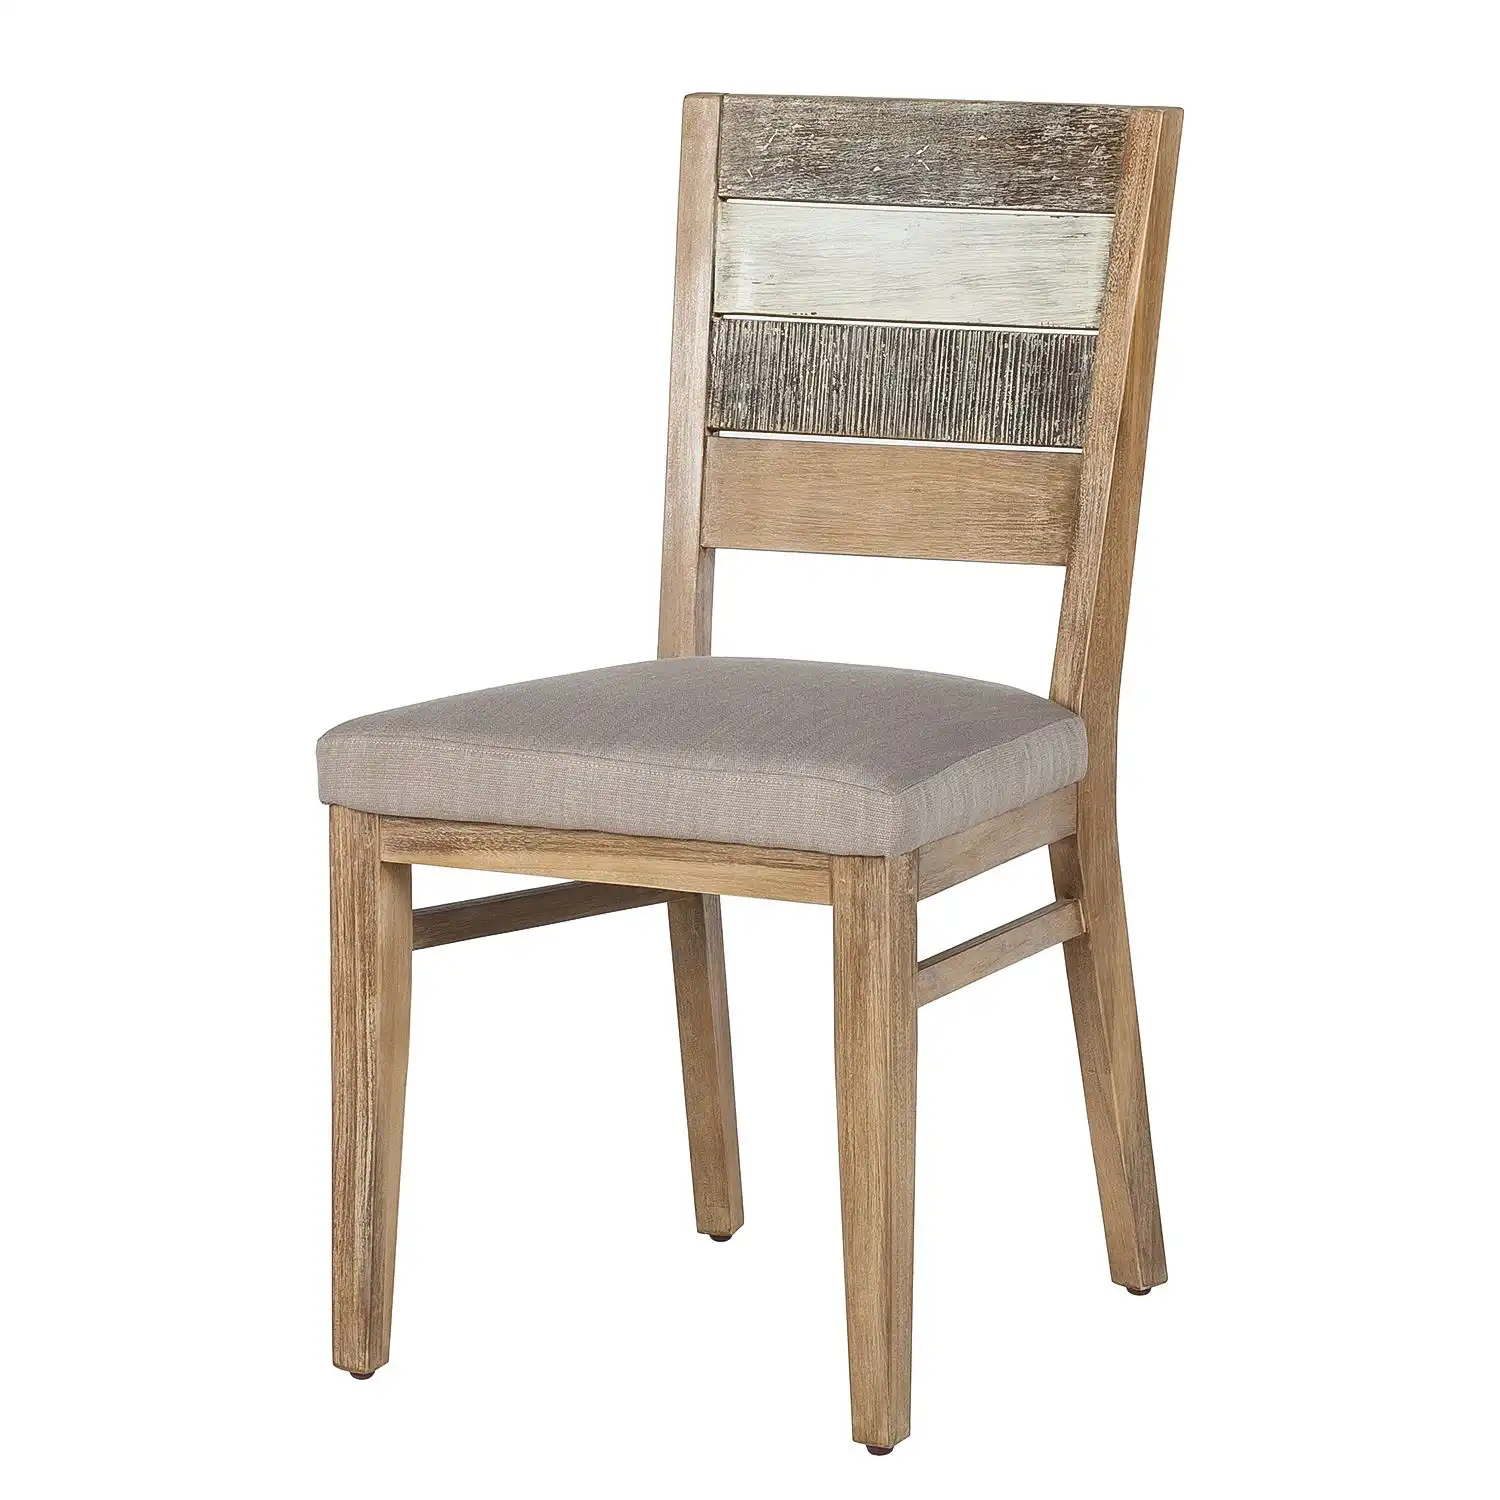 Mango wood Chair
Set of 2 - popular handicrafts